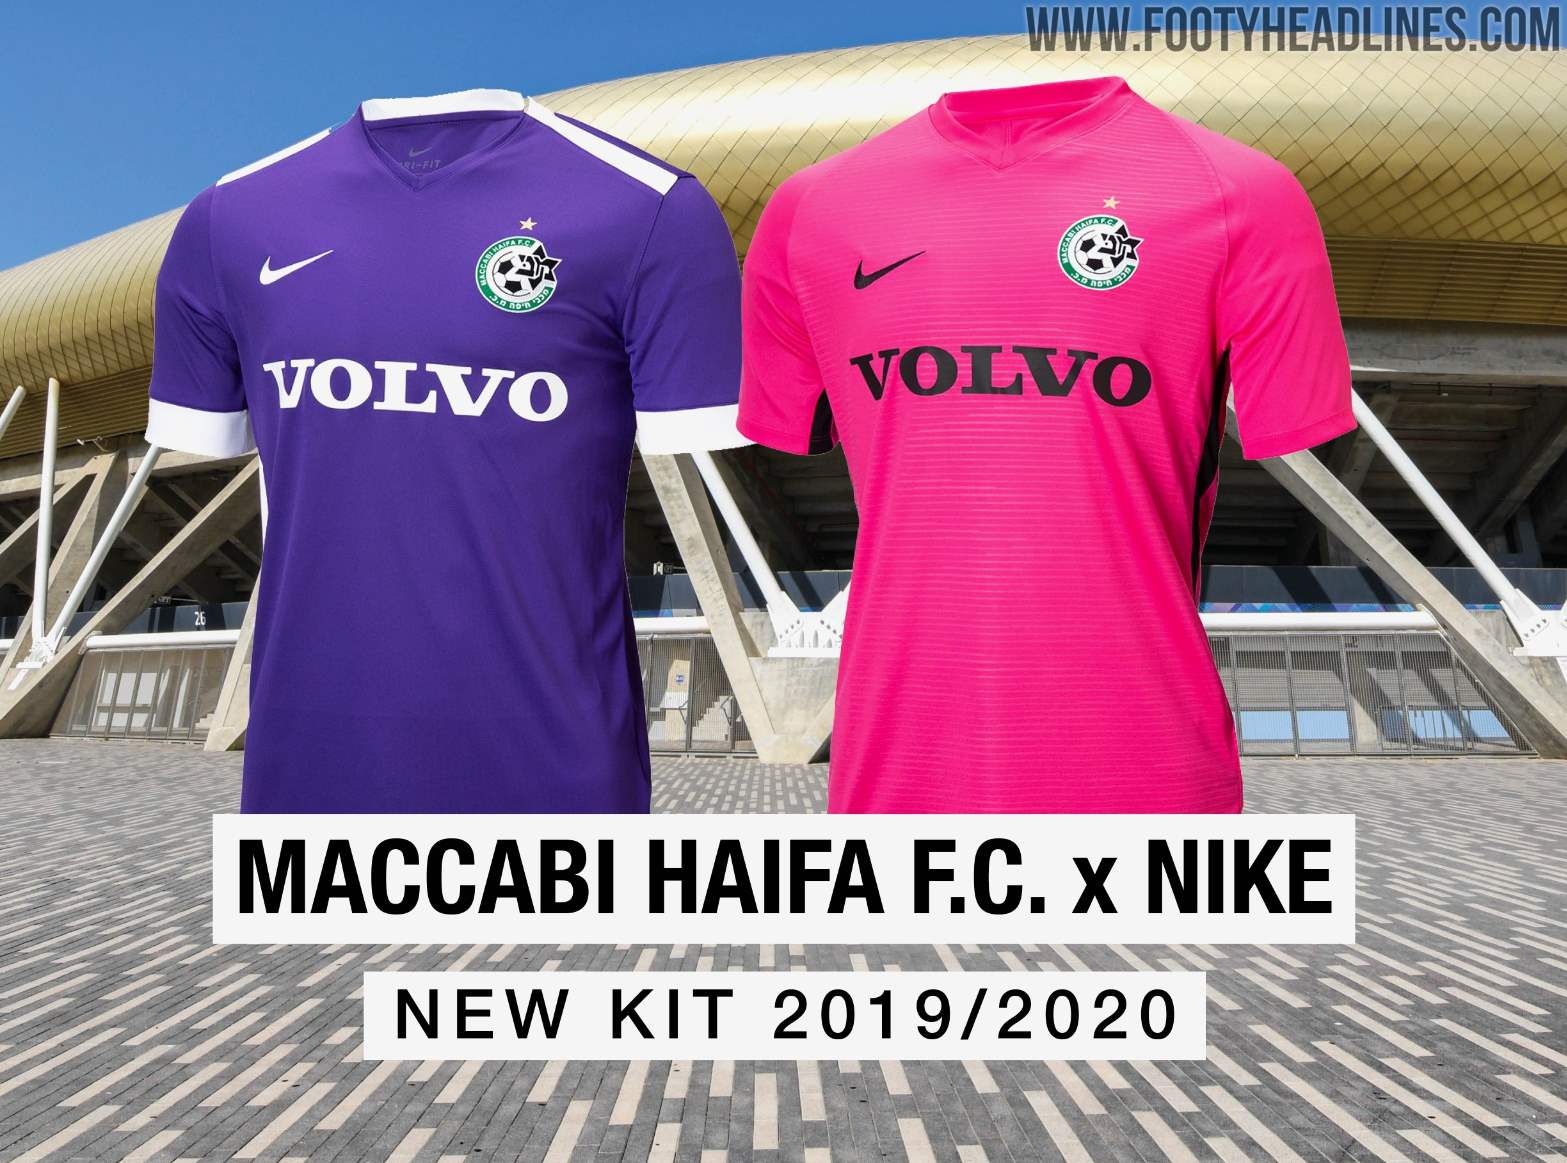 Nike Maccabi Haifa 19-20 Home, Away and Third Kits Released - Footy